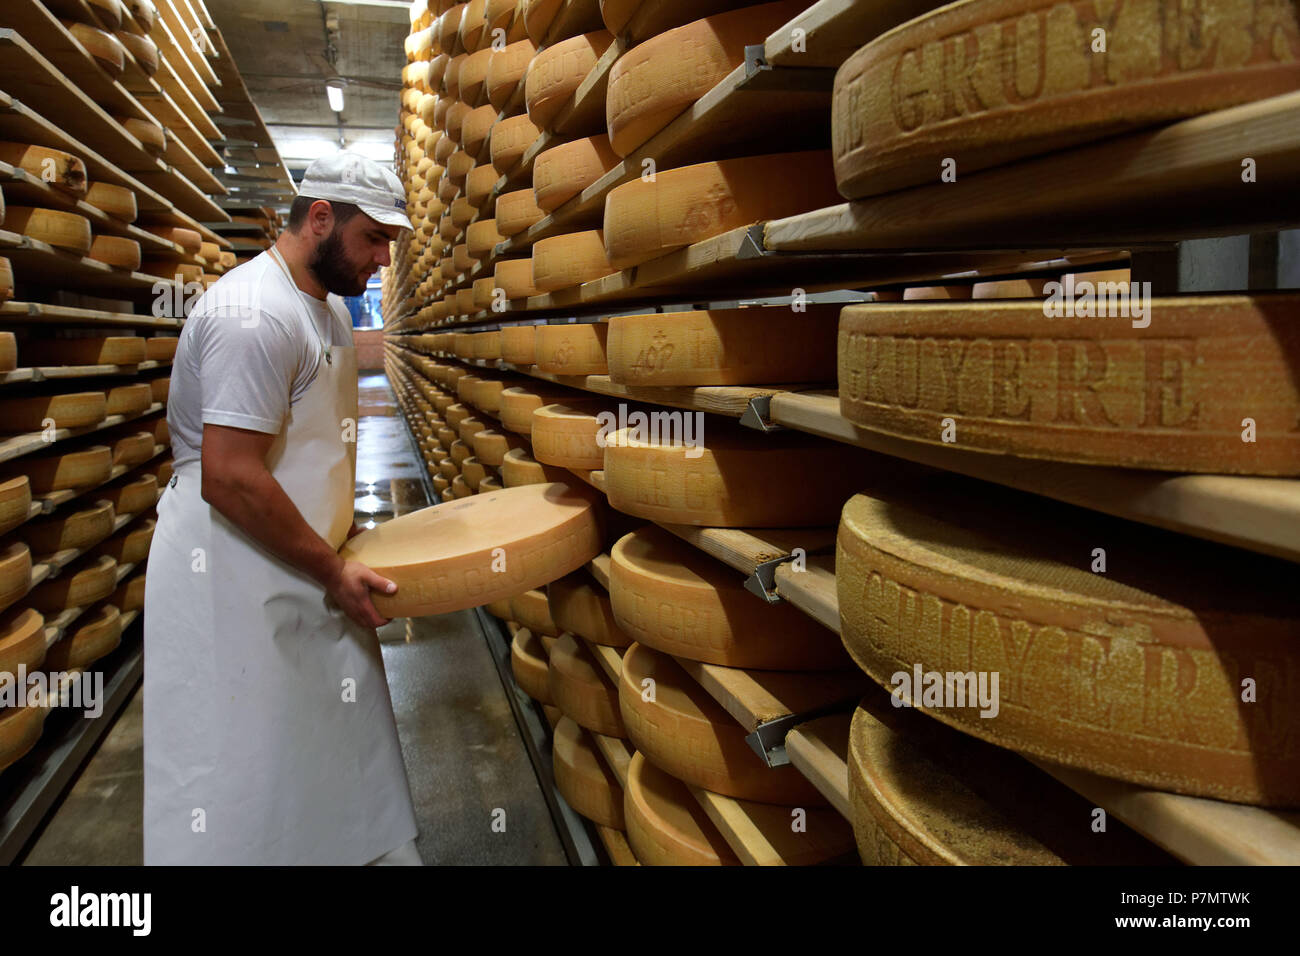 https://c8.alamy.com/comp/P7MTWK/switzerland-canton-of-fribourg-gruyeres-la-maison-du-gruyere-house-of-gruyere-cheese-gruyere-cheese-in-cellar-P7MTWK.jpg